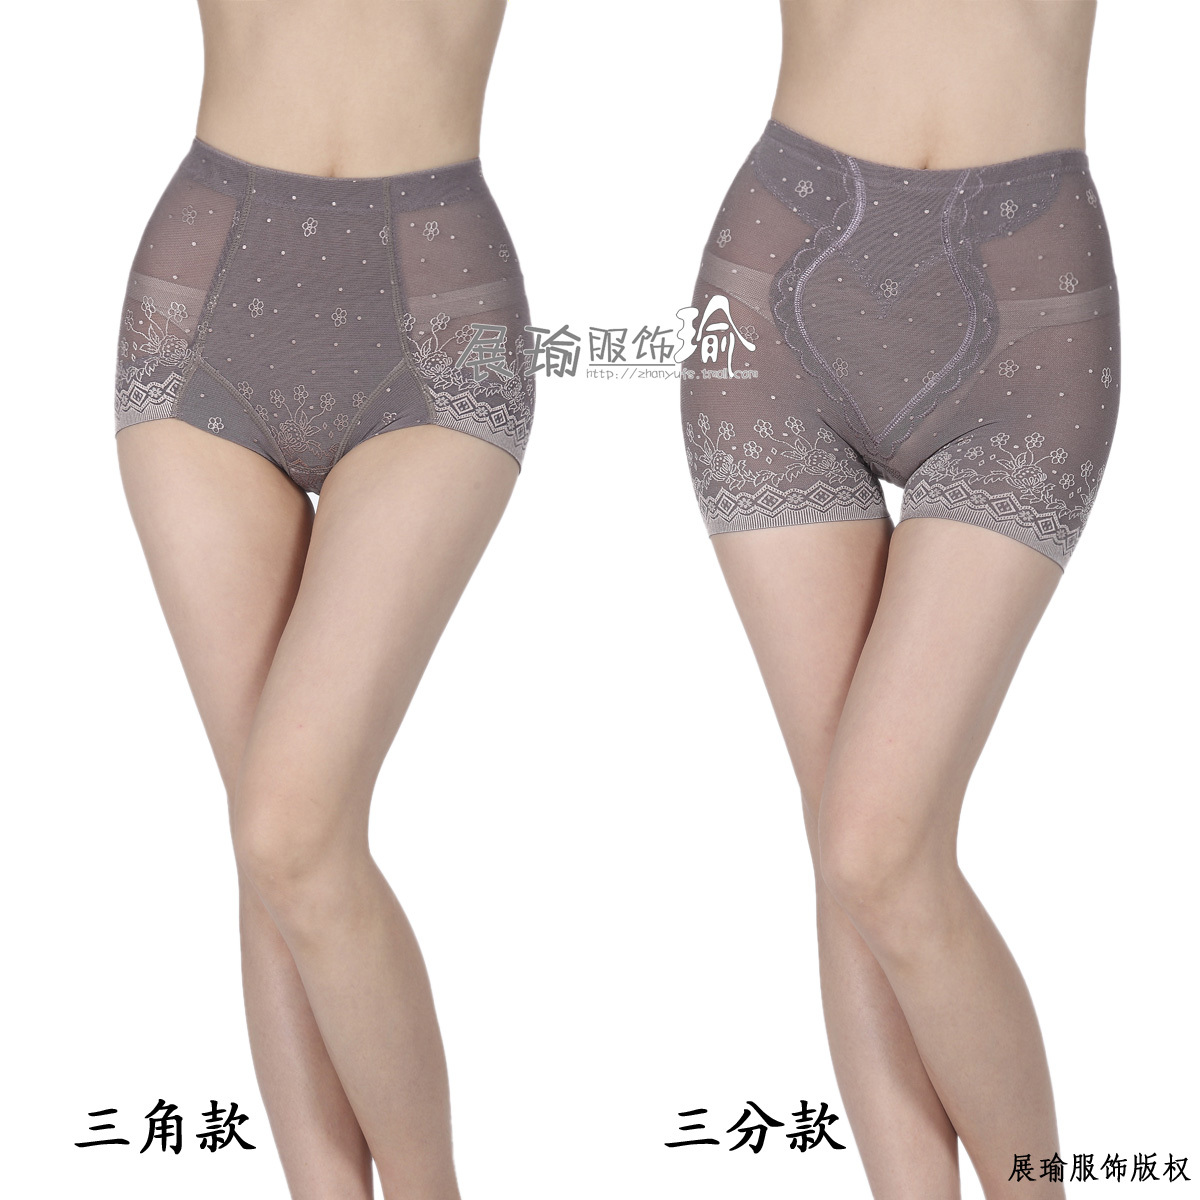 2 trigonometric basic seamless abdomen drawing butt-lifting gauze breathable body shaping beauty care safety pants